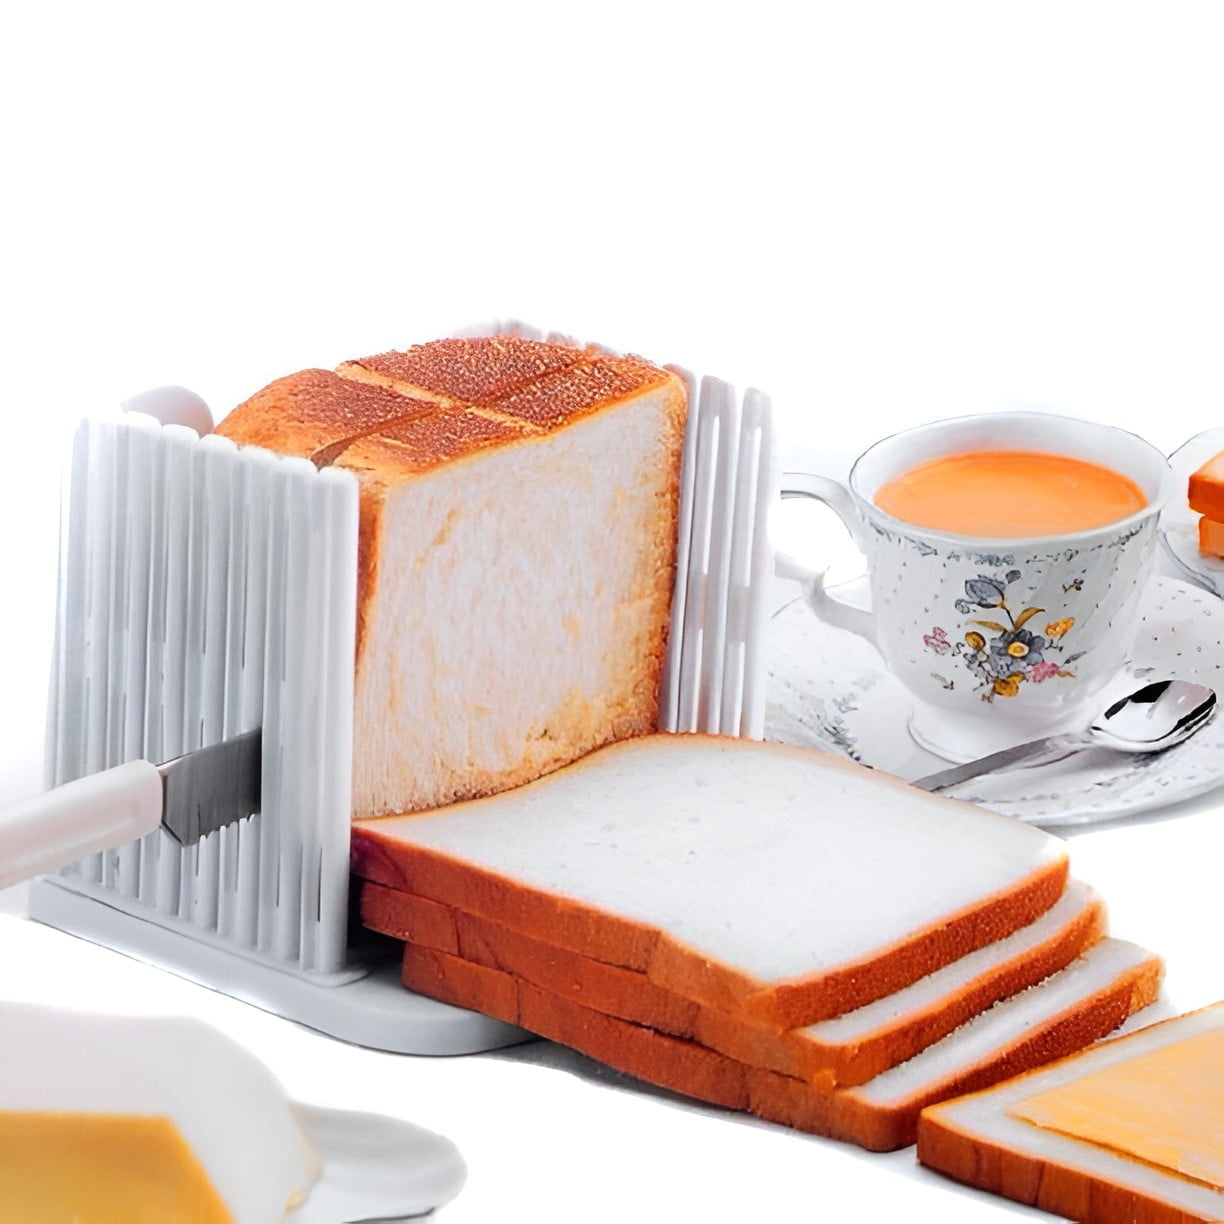 1pc Bread Slicer Guide For Homemade Bread Loaf, Toast & Bagel